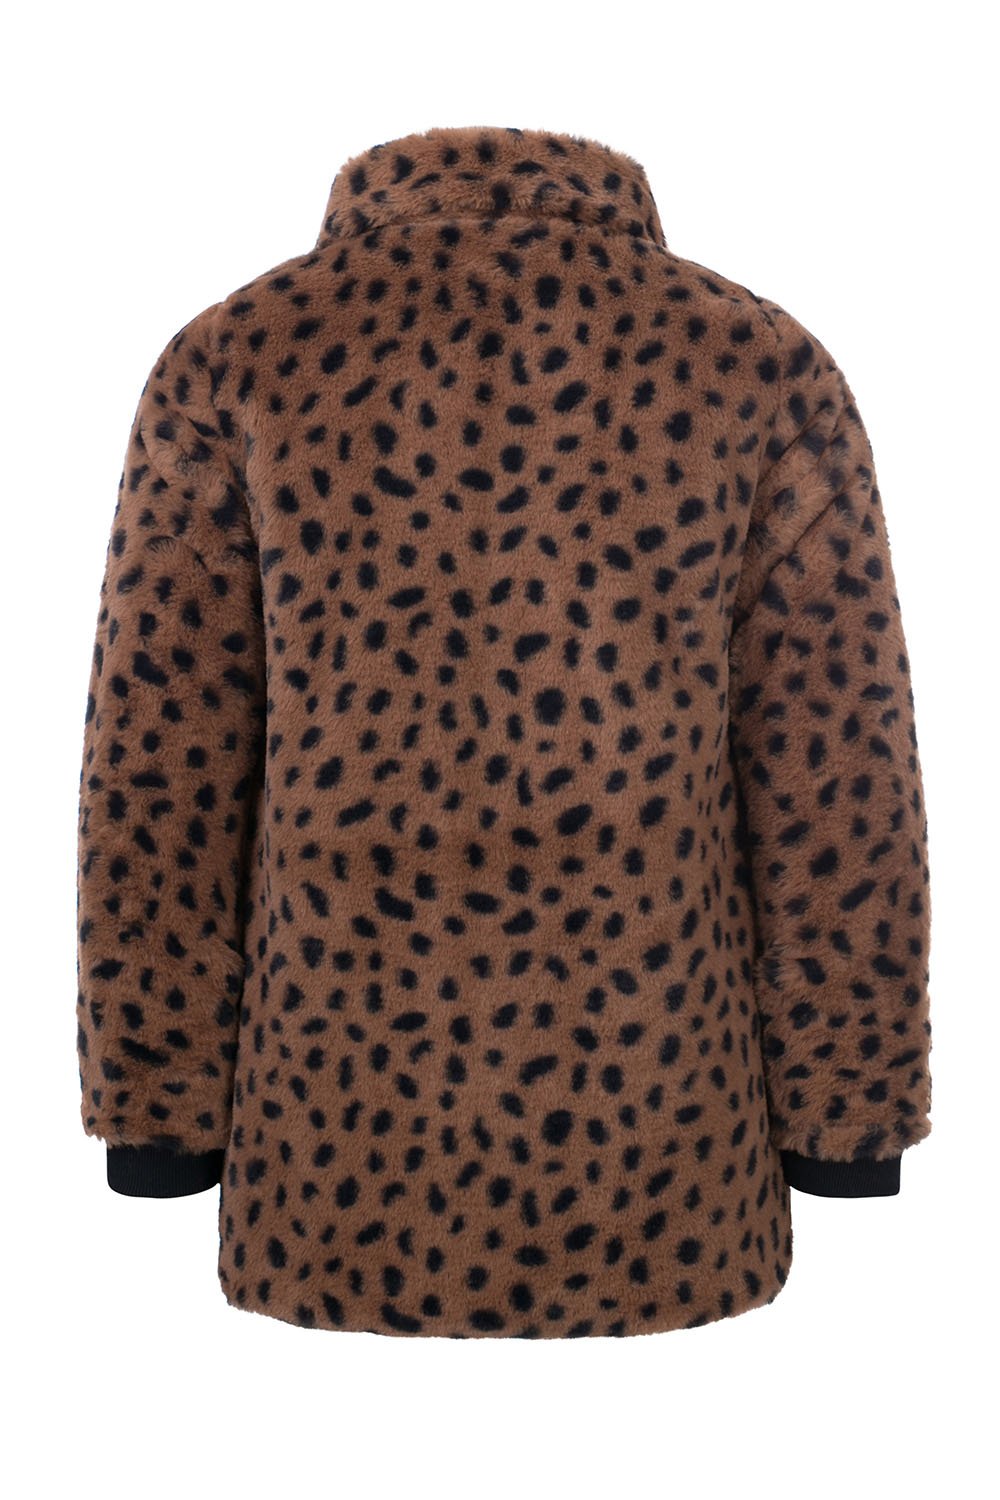 Meisjes Little jacket cheeta fur van LOOXS Little in de kleur cheeta in maat 128.